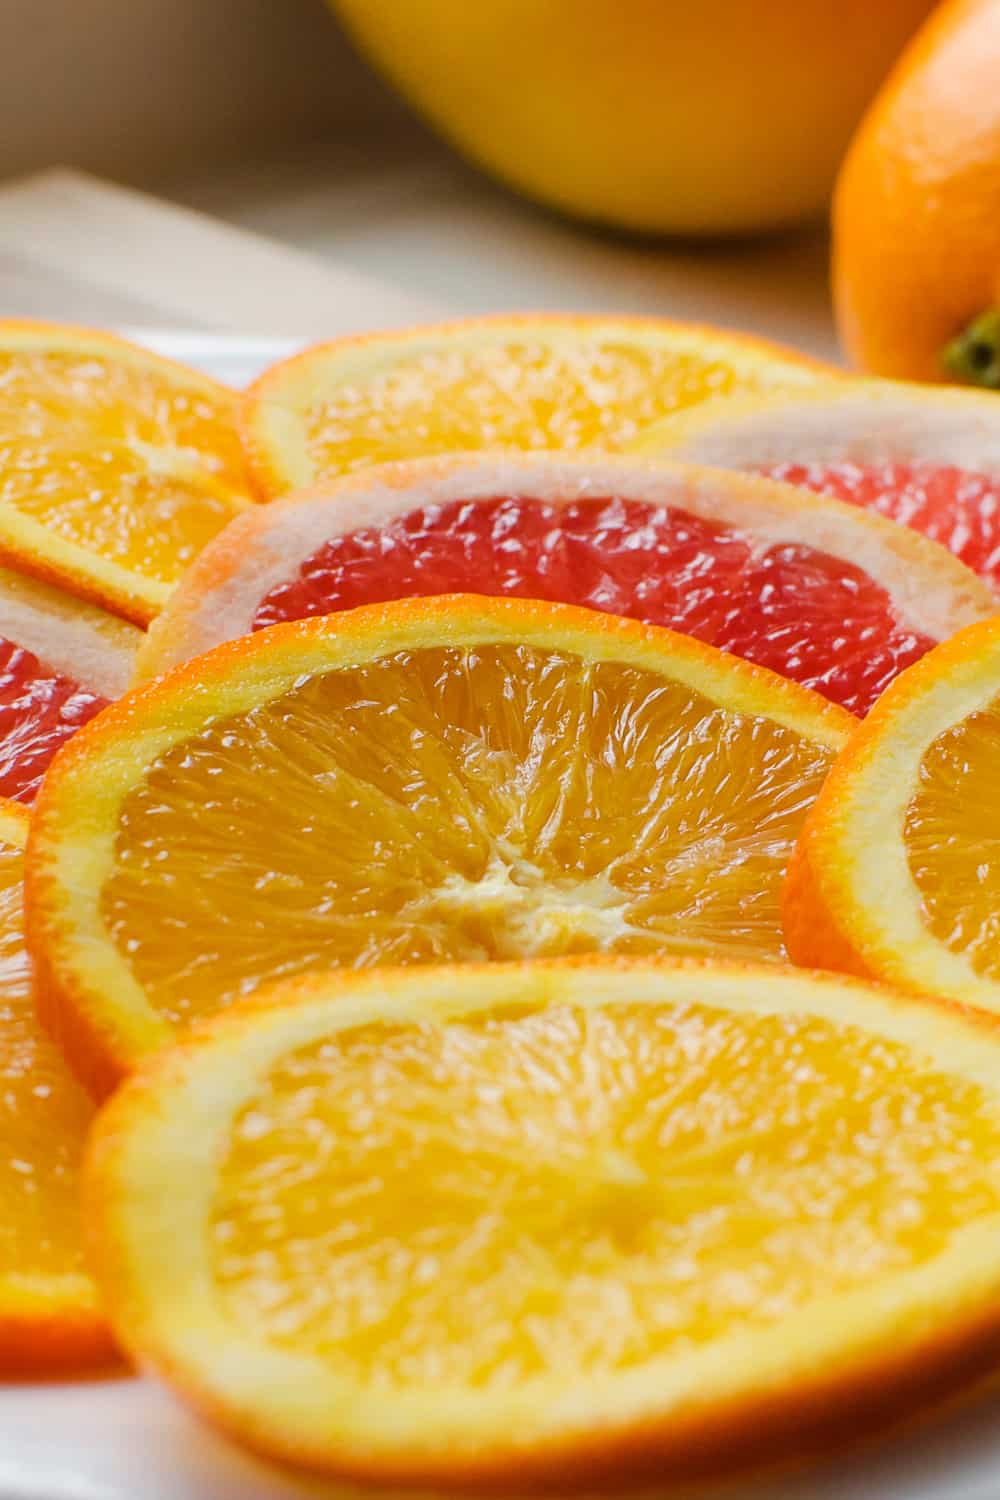 rodajas de naranja y pomelo